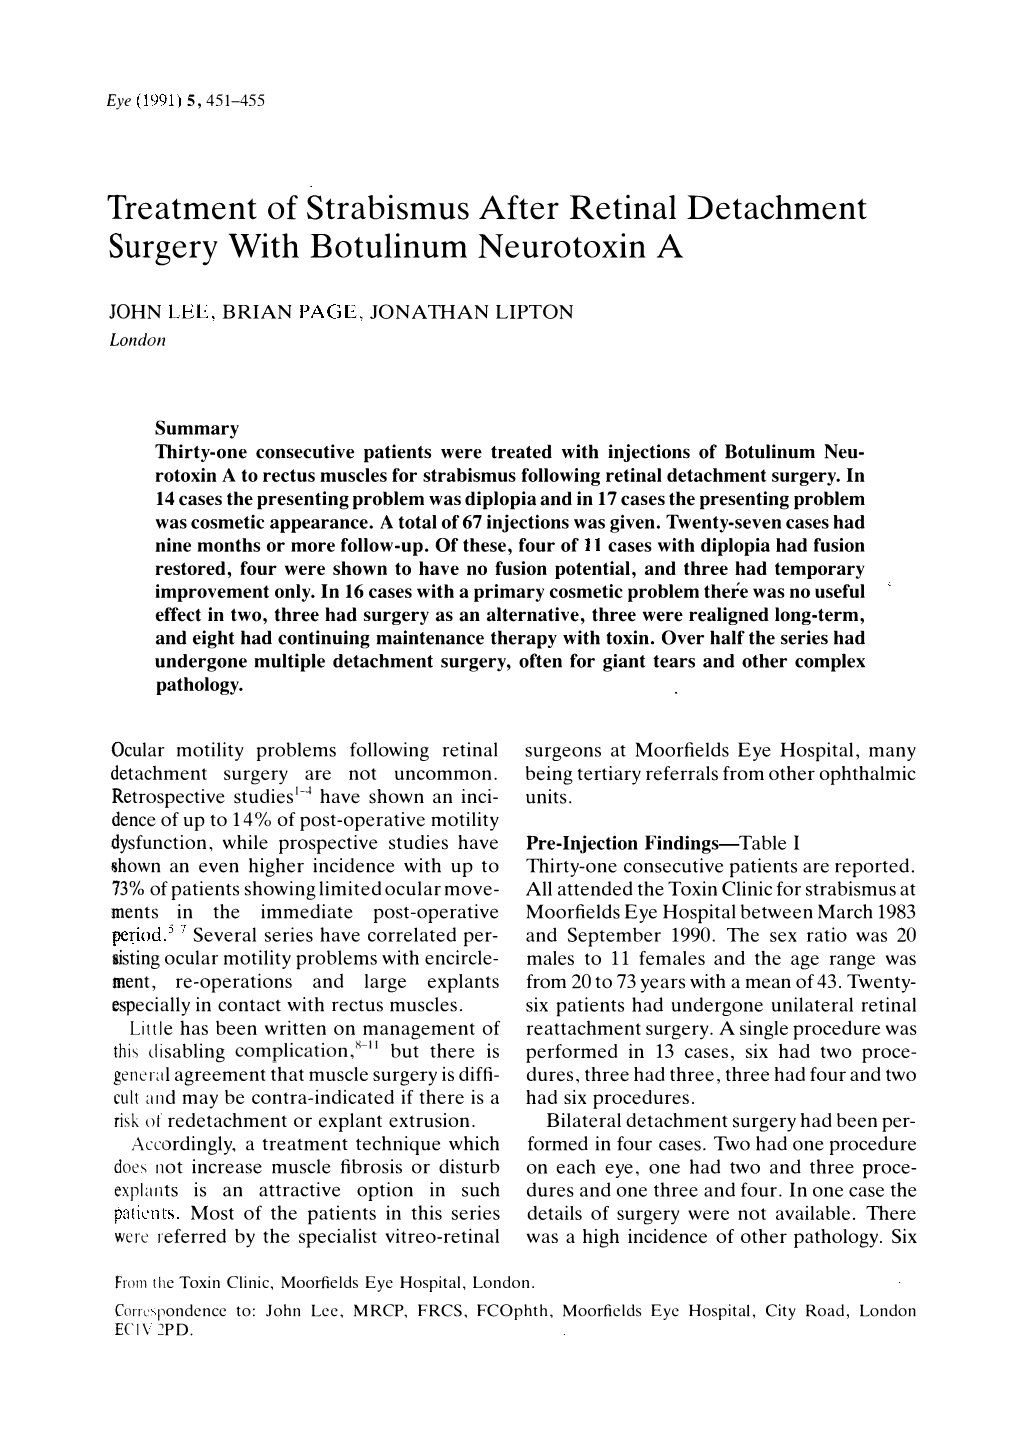 Treatment of Strabismus After Retinal Detachment Surgery with Botulinum Neurotoxin A